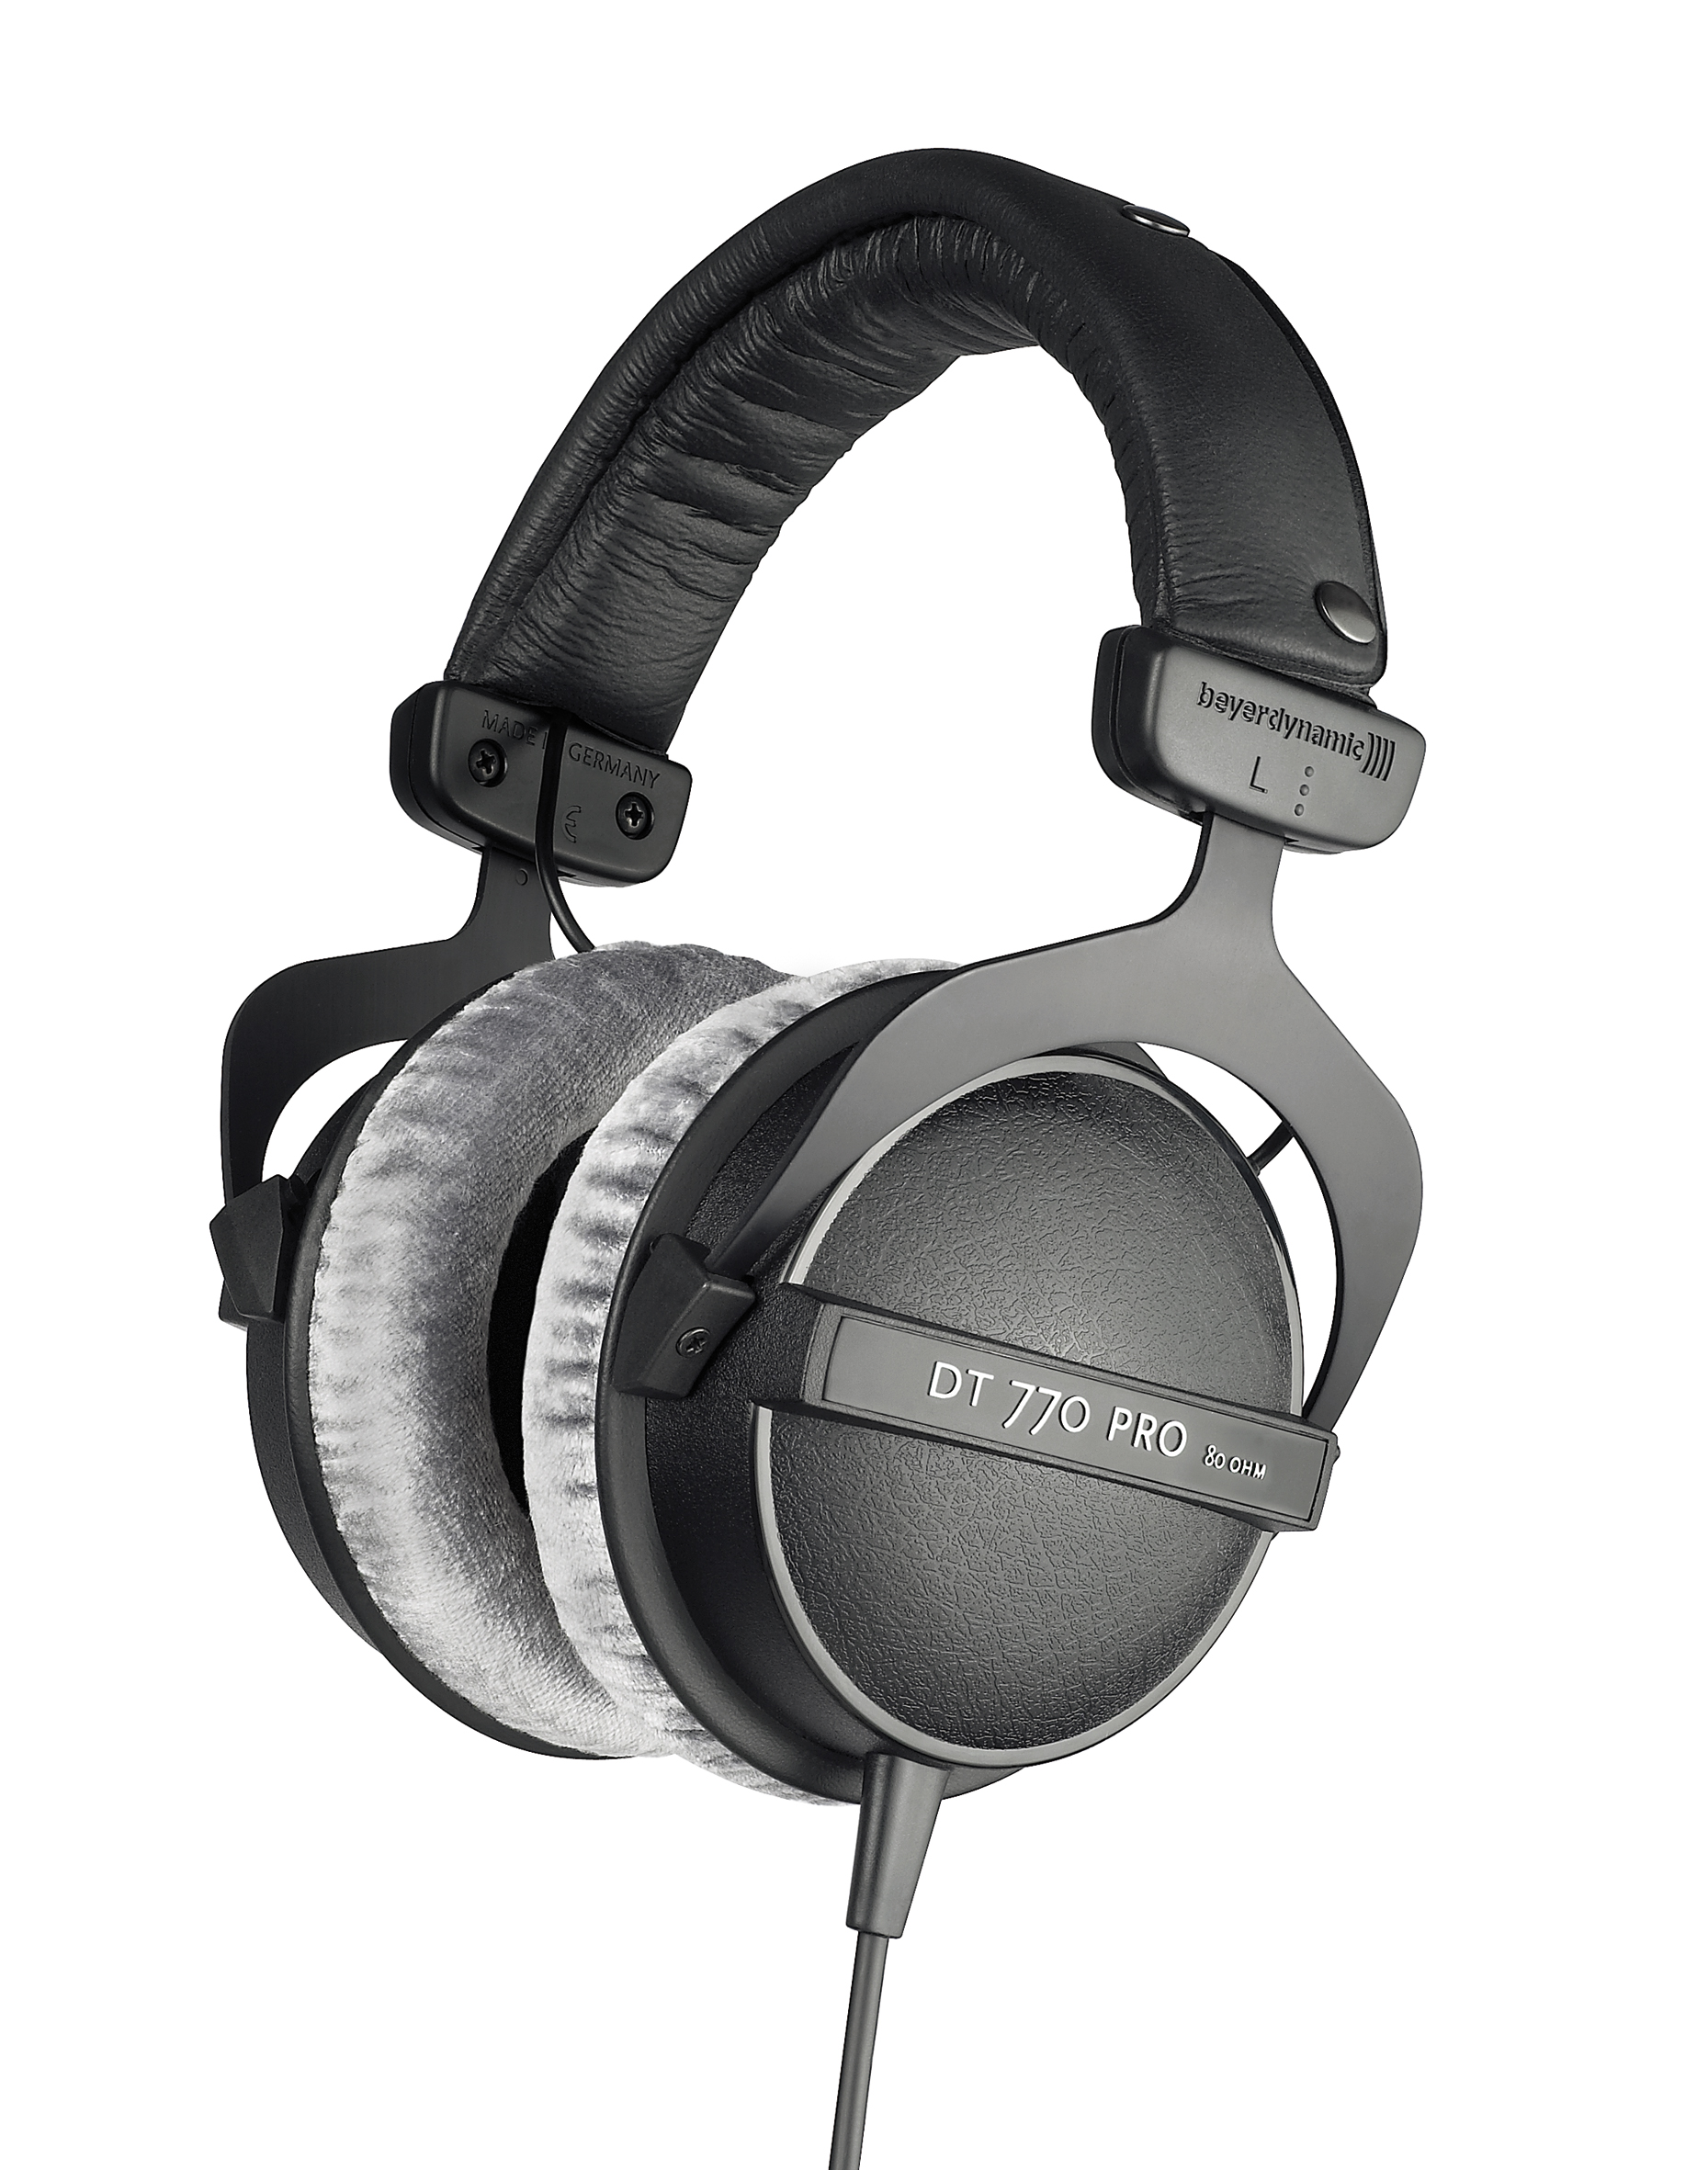 An image of B-Stock Beyerdynamic DT770 Pro Headphones - 250 Ohm